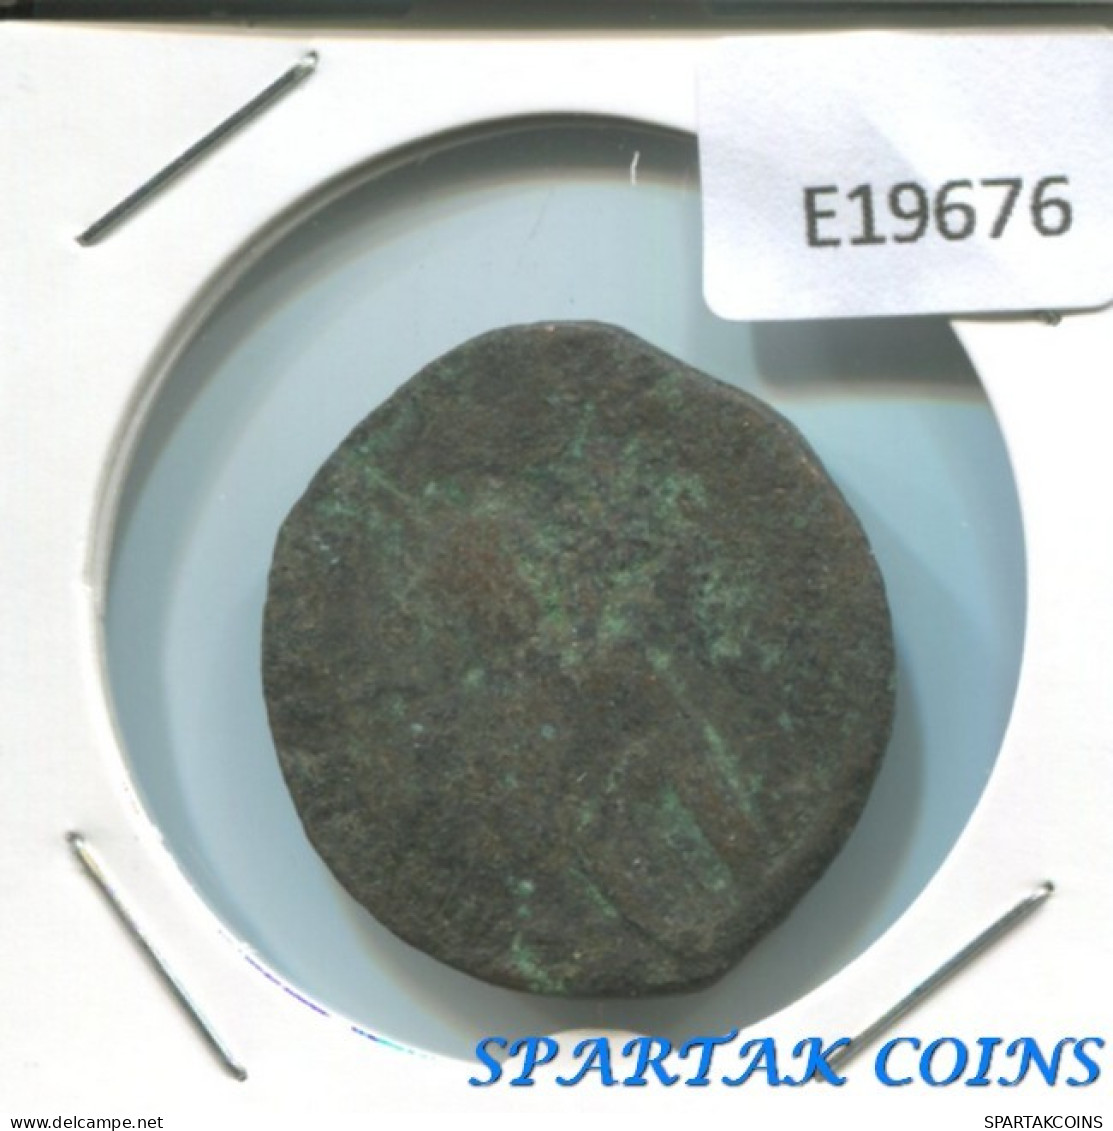 Auténtico Original Antiguo BYZANTINE IMPERIO Moneda #E19676.4.E.A - Bizantinas